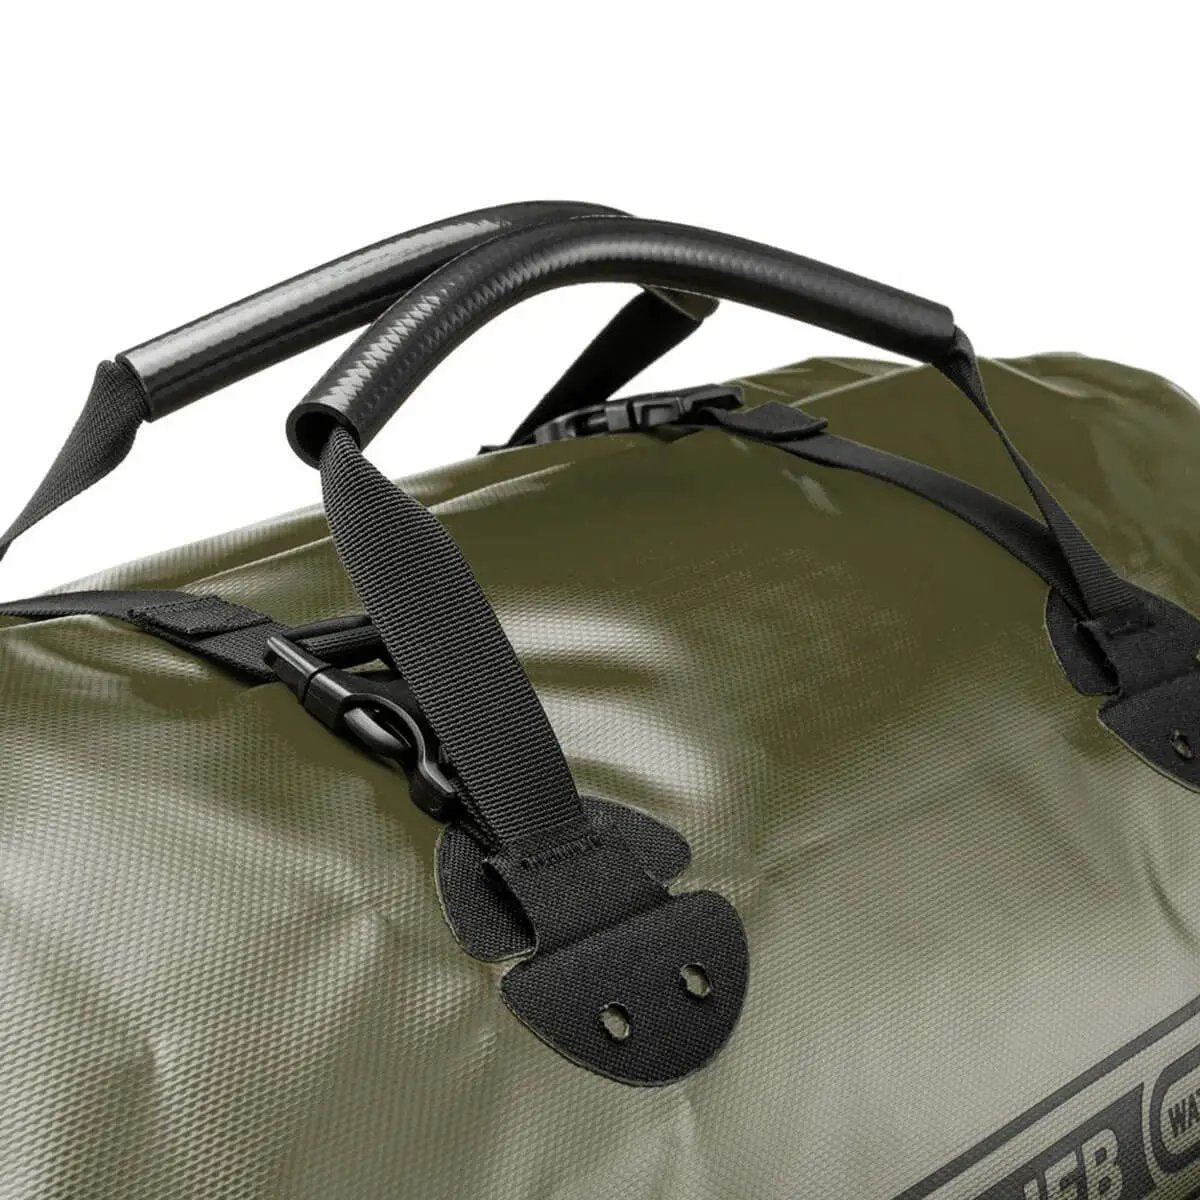 Ortlieb Rack-Pack 49L Waterproof Duffle Bag - John Bull Clothing